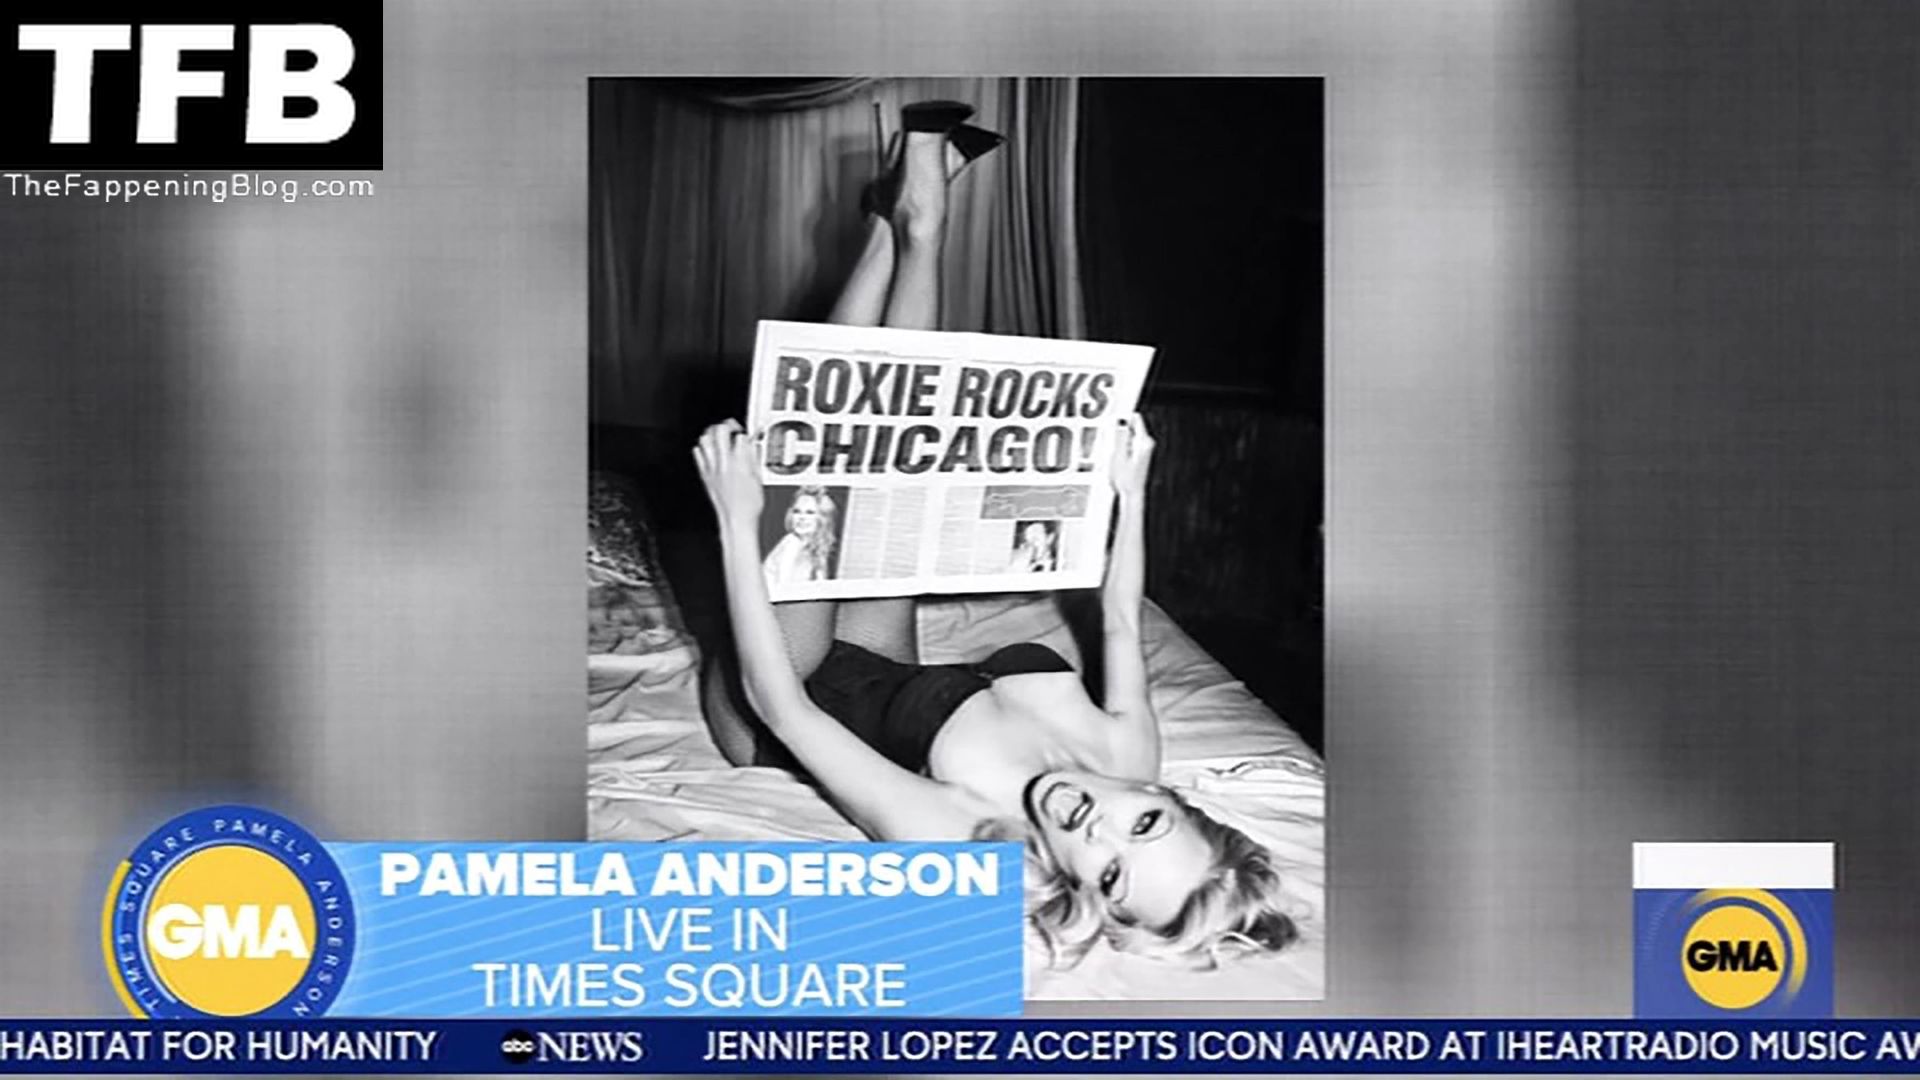 Pamela-Anderson-Hot-The-Fappening-Blog-26.jpg